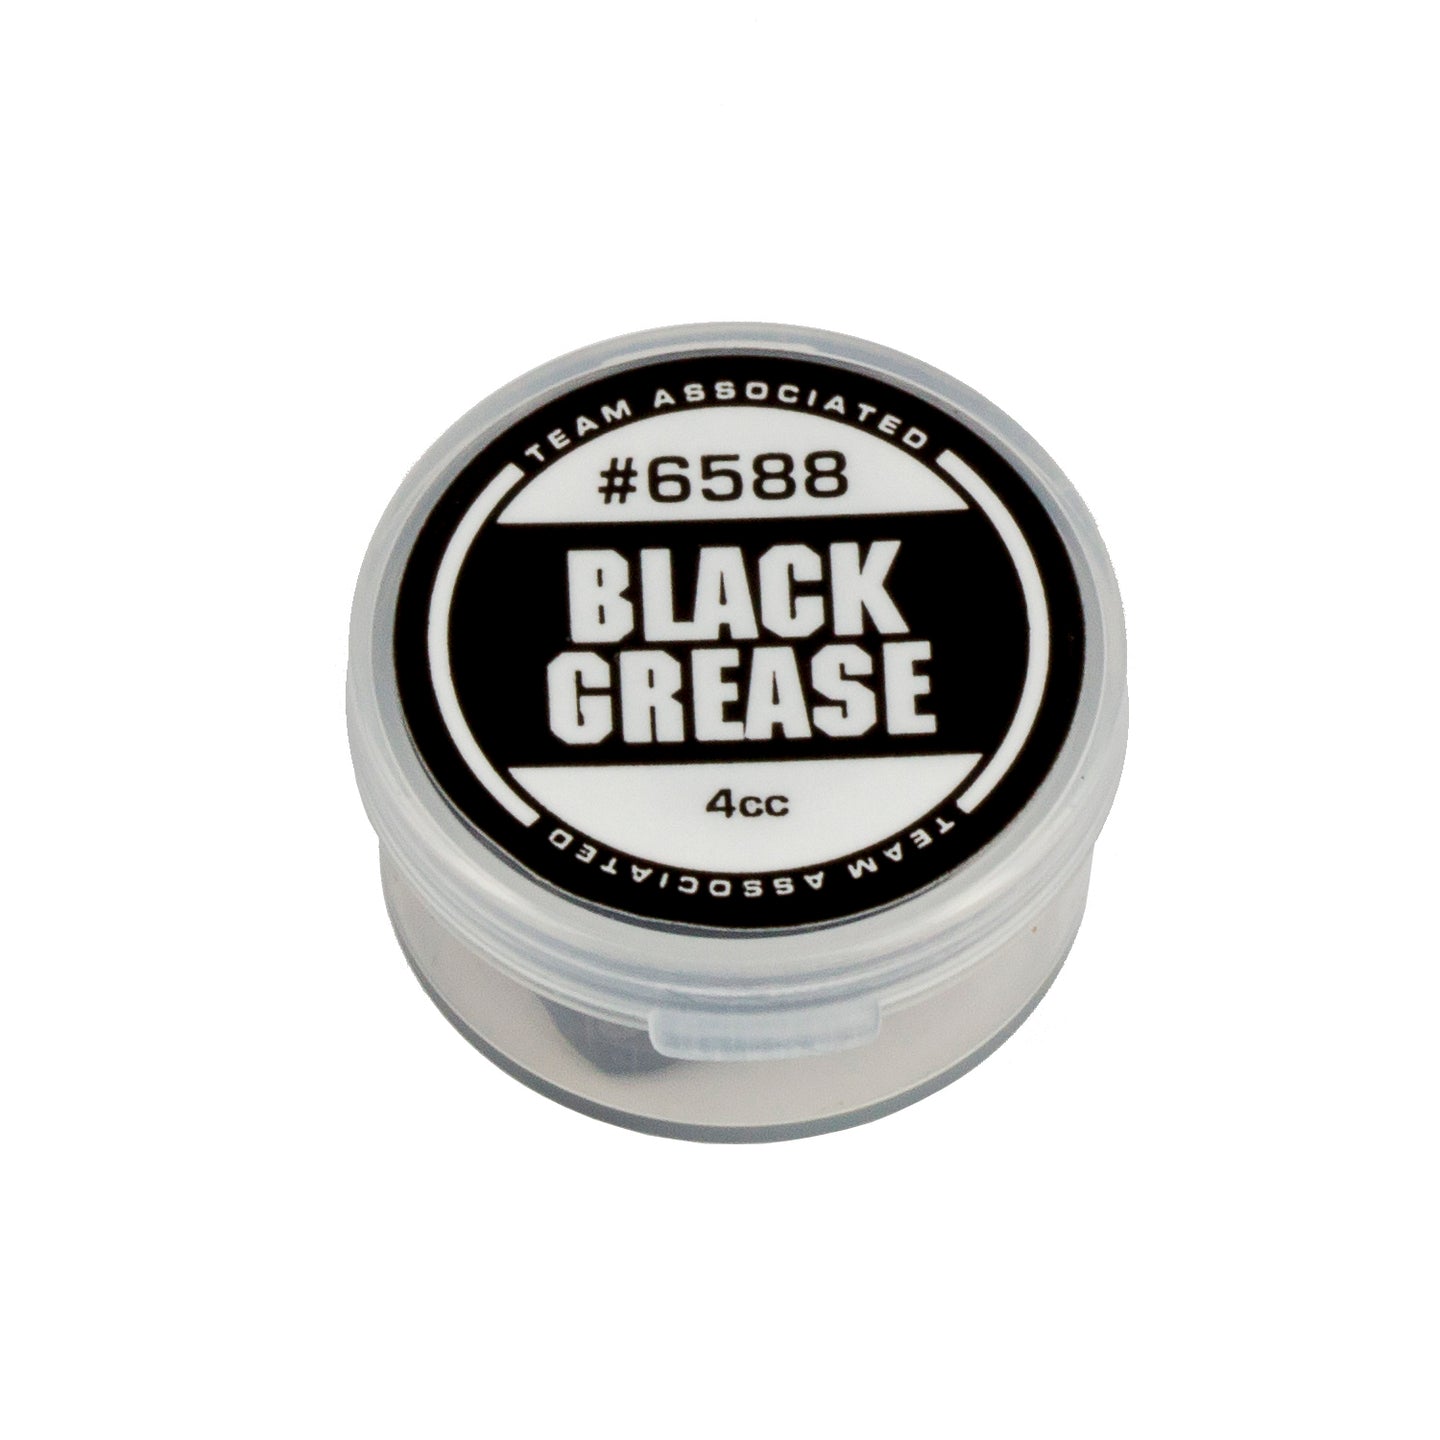 6588 BLACK GREASE - 4CC